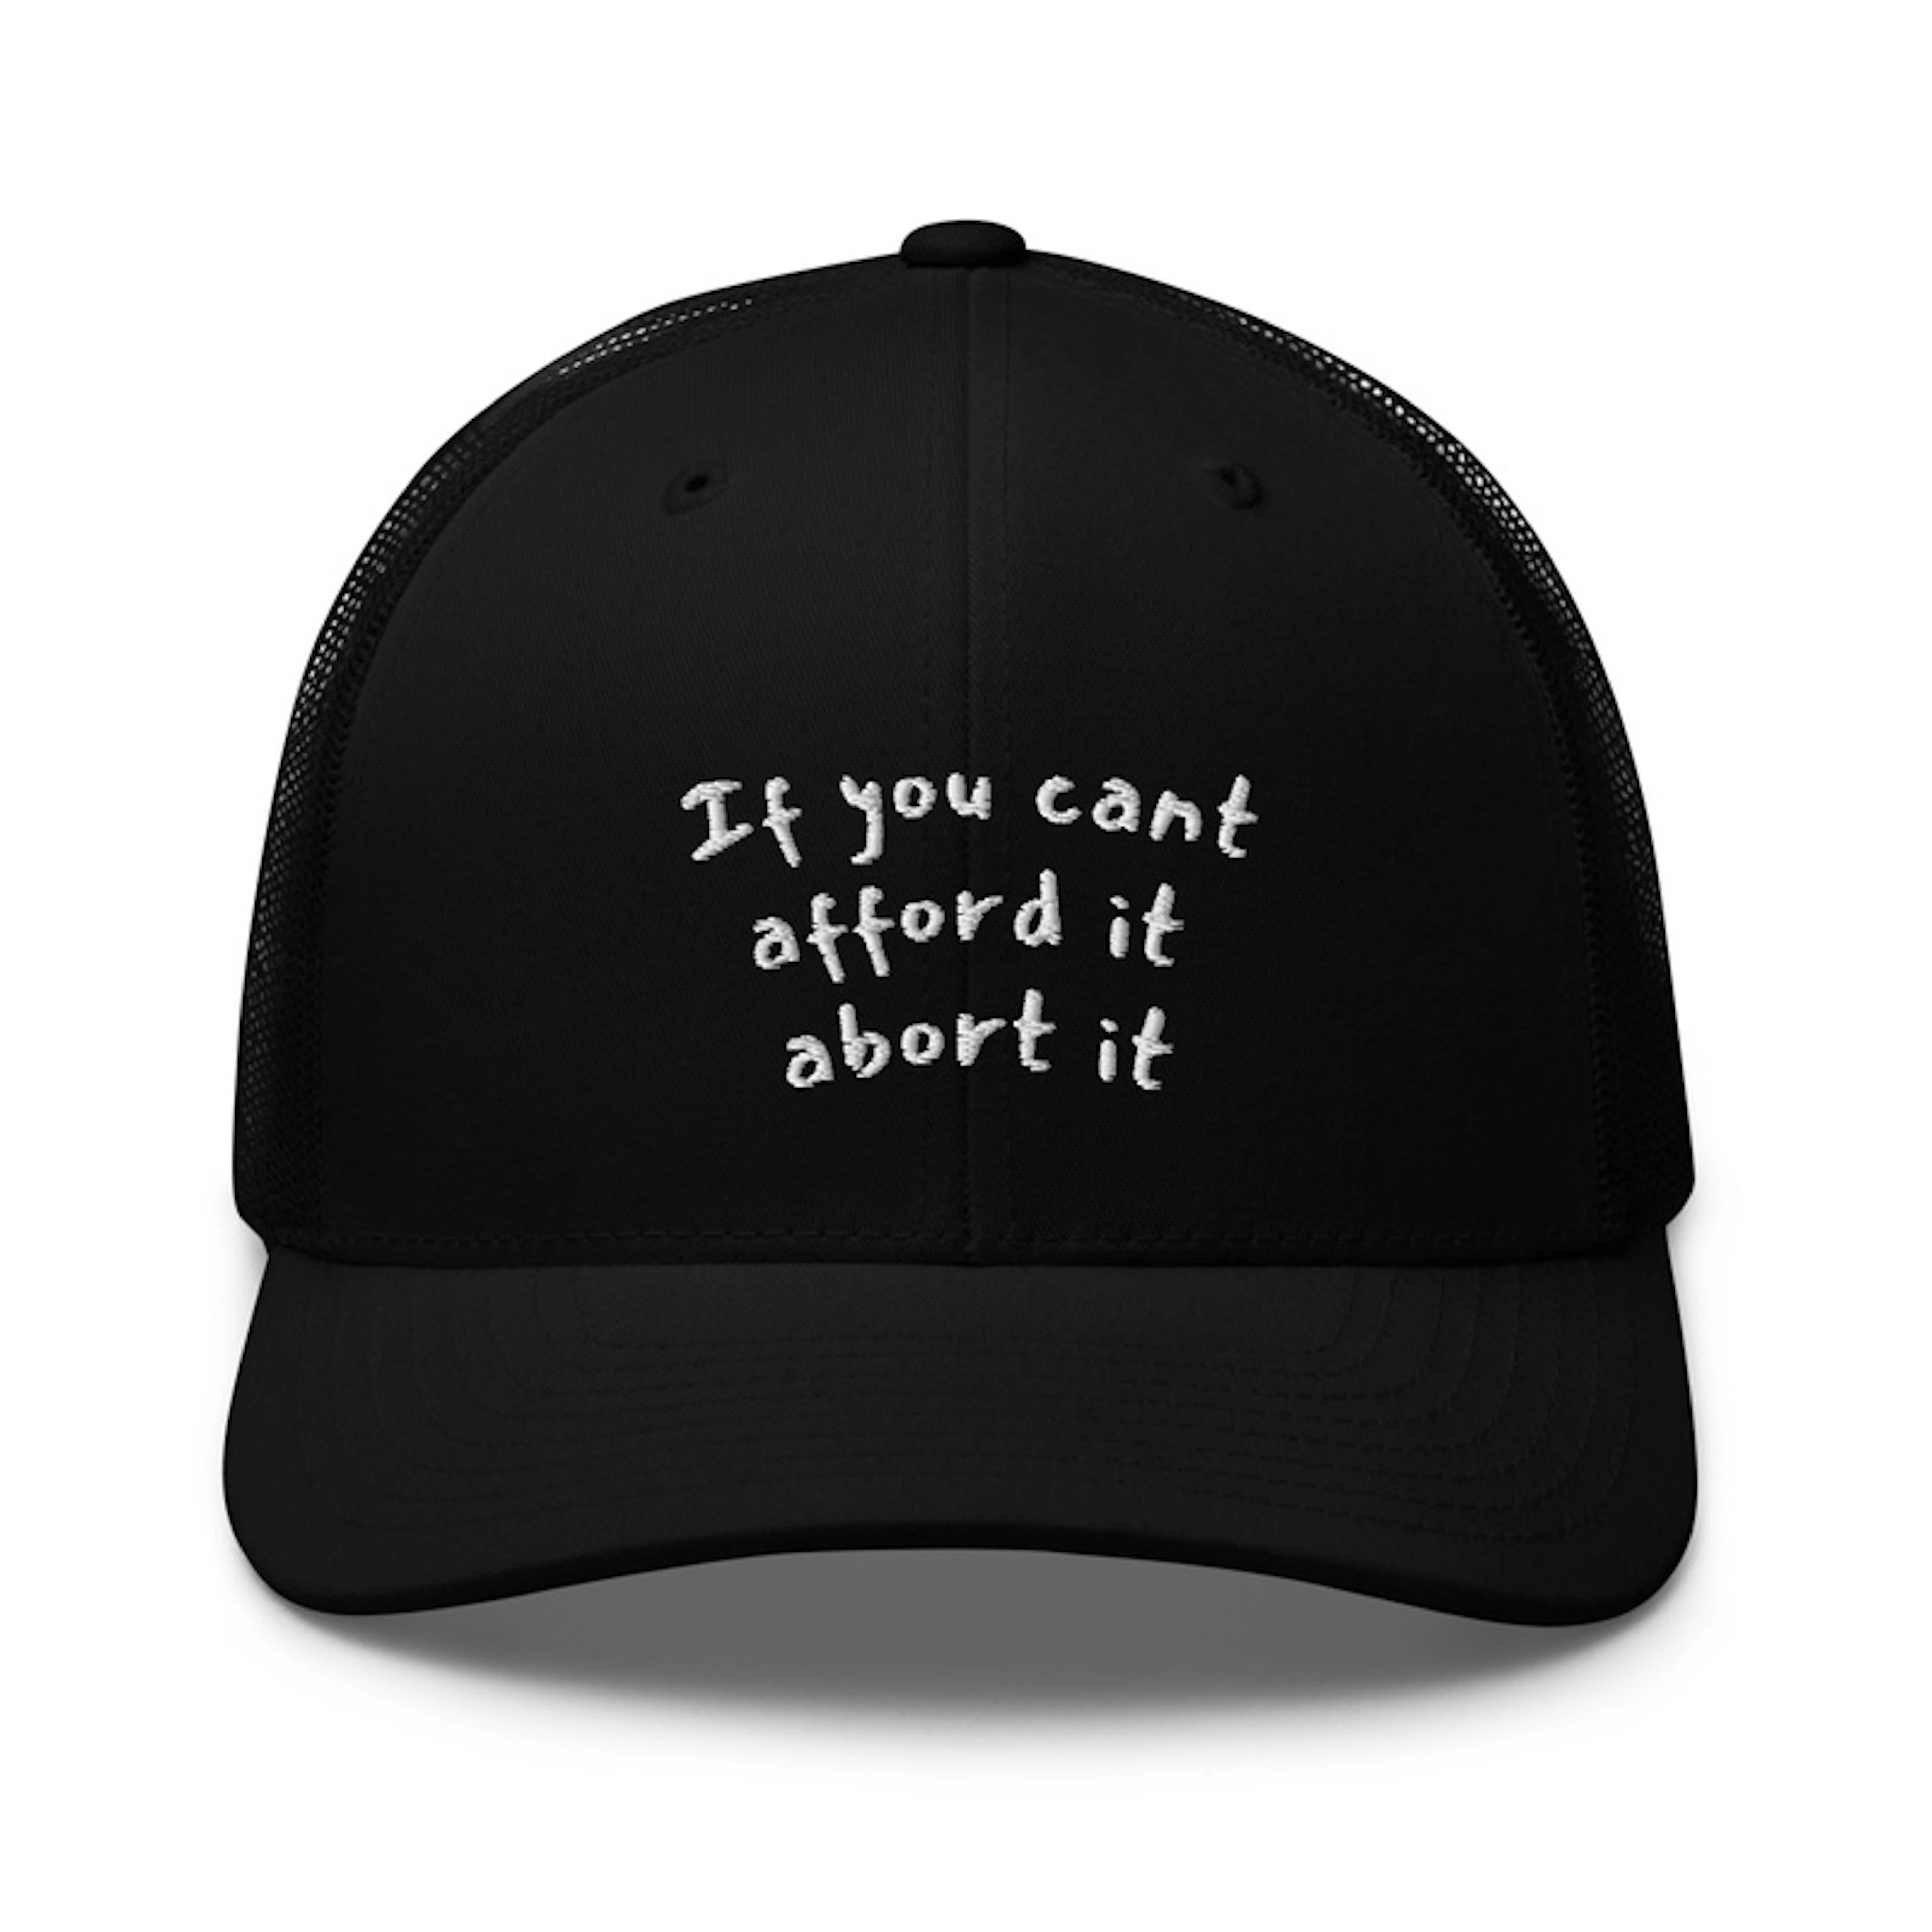 Abort it trucker hat